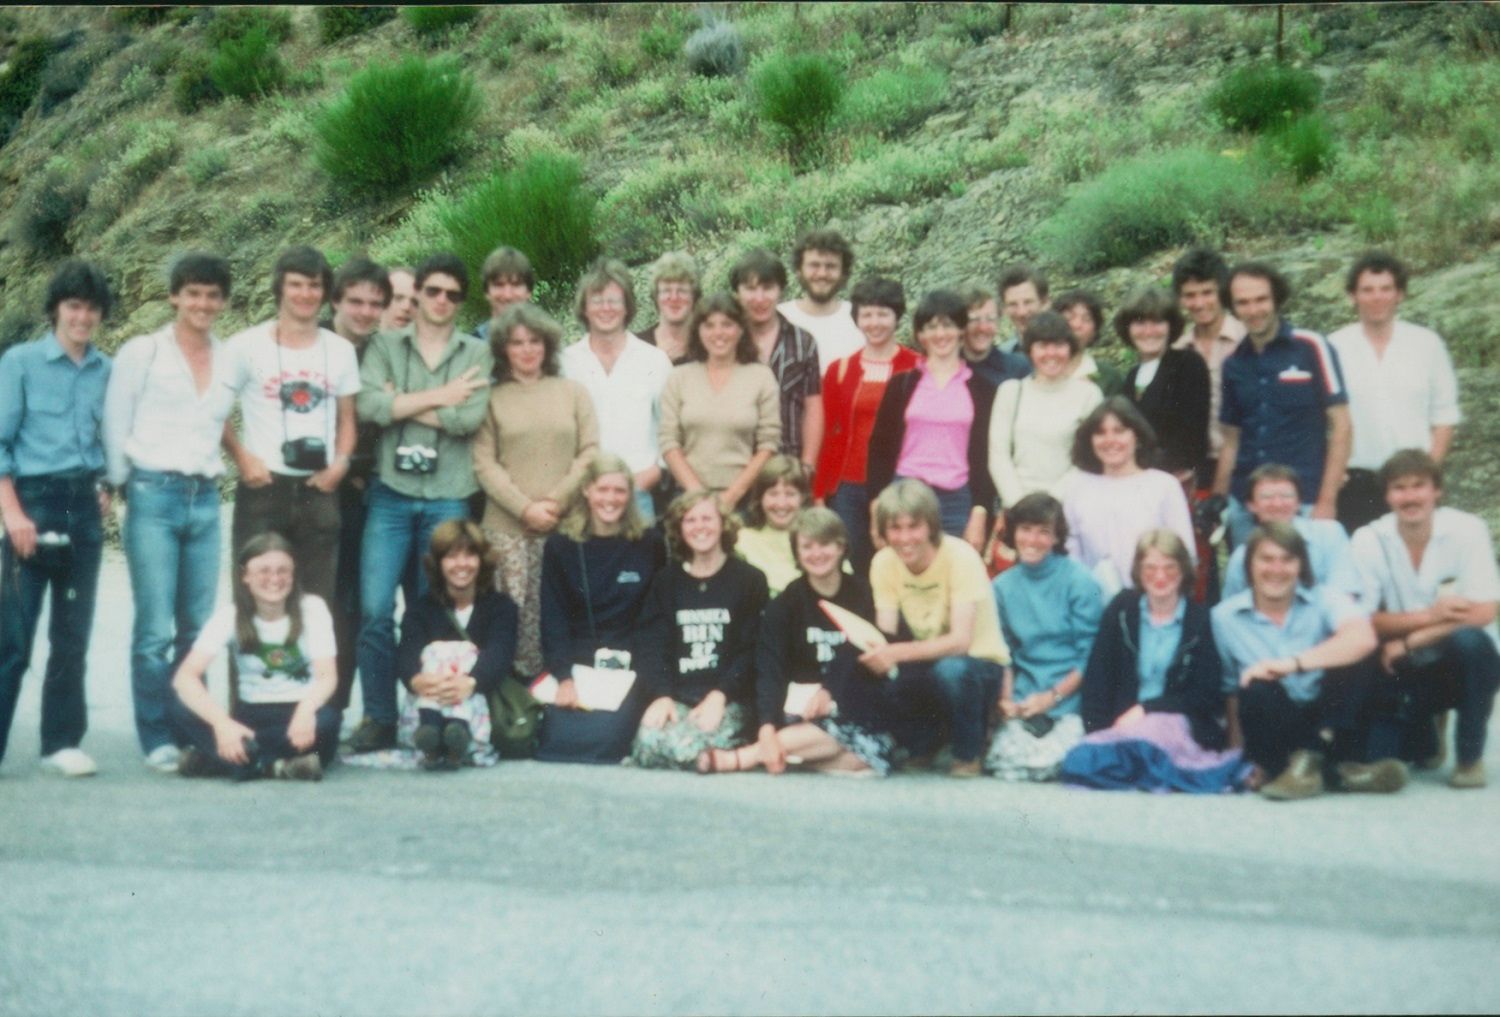 1980 Portugal Field trip with Jim Lewis - Image from Linda Drury